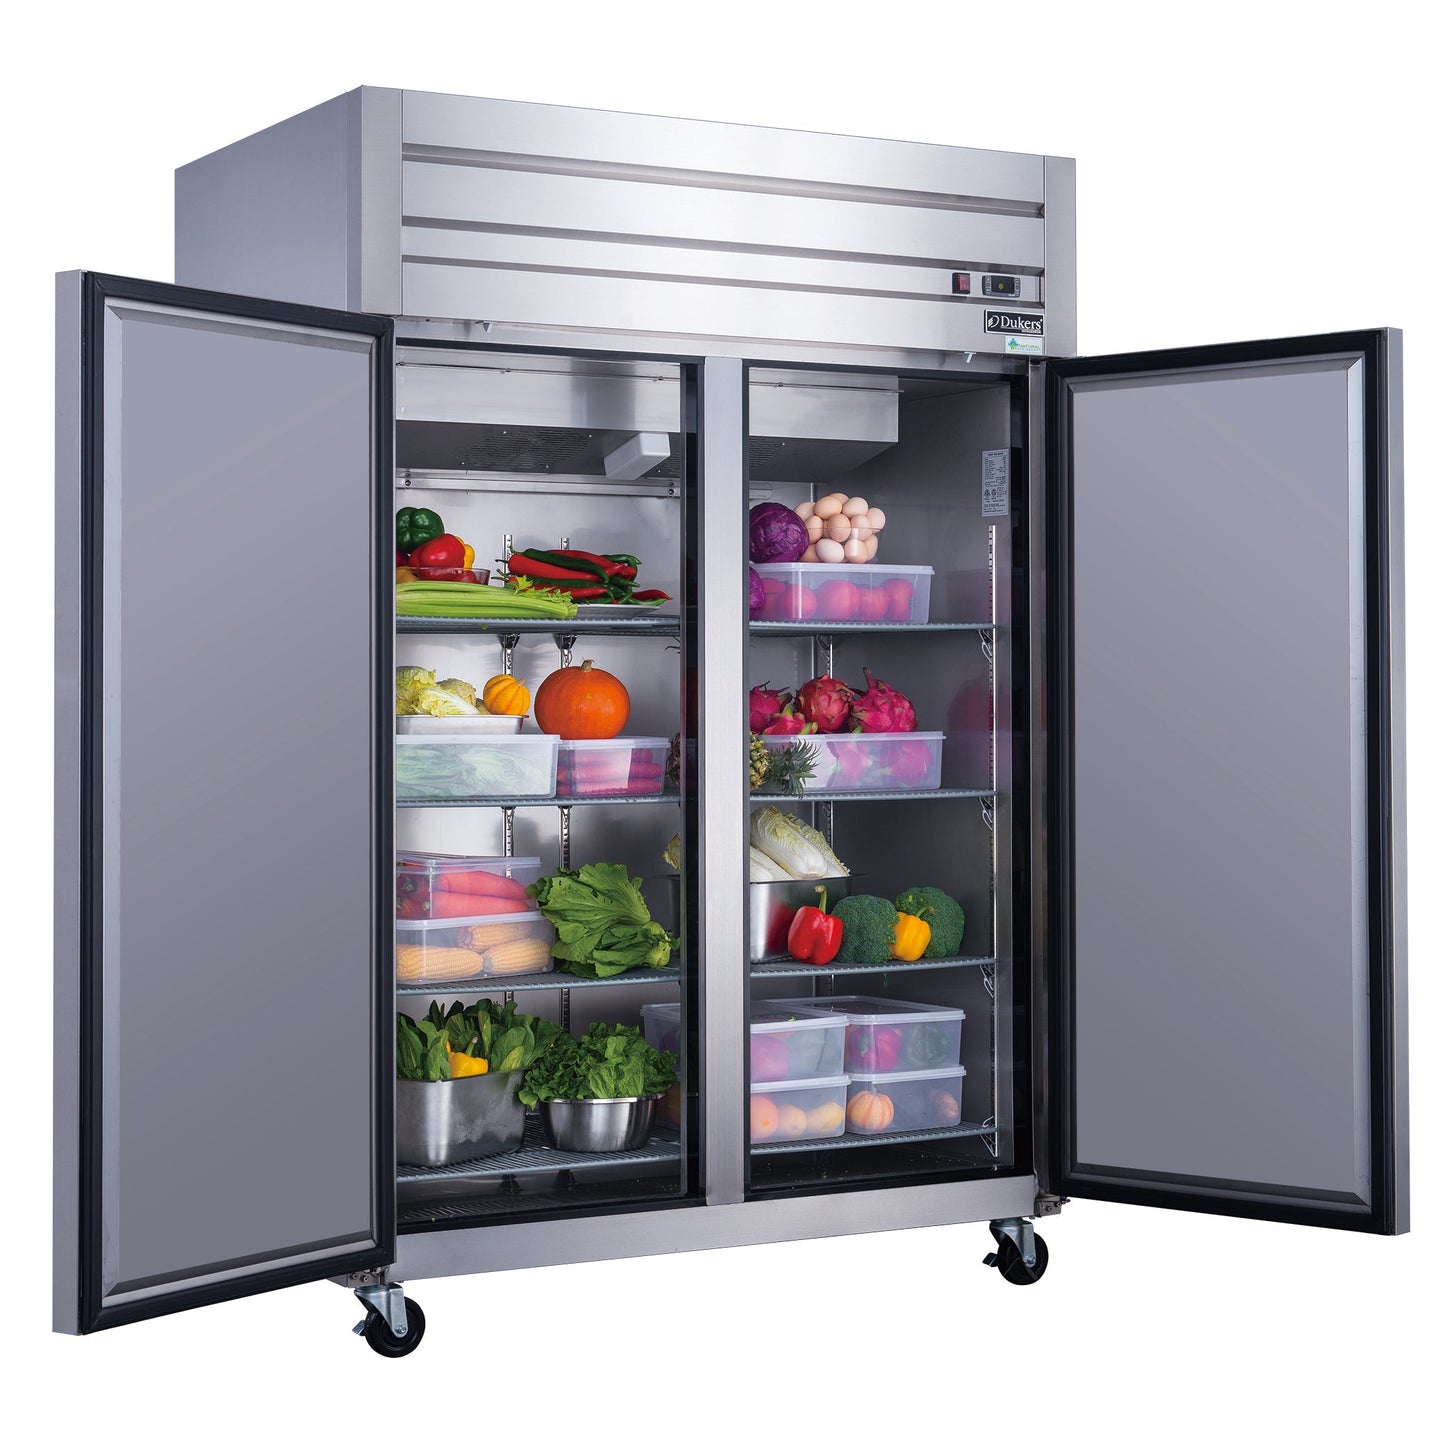 Dukers D55AR 2-Door Commercial Refrigerator